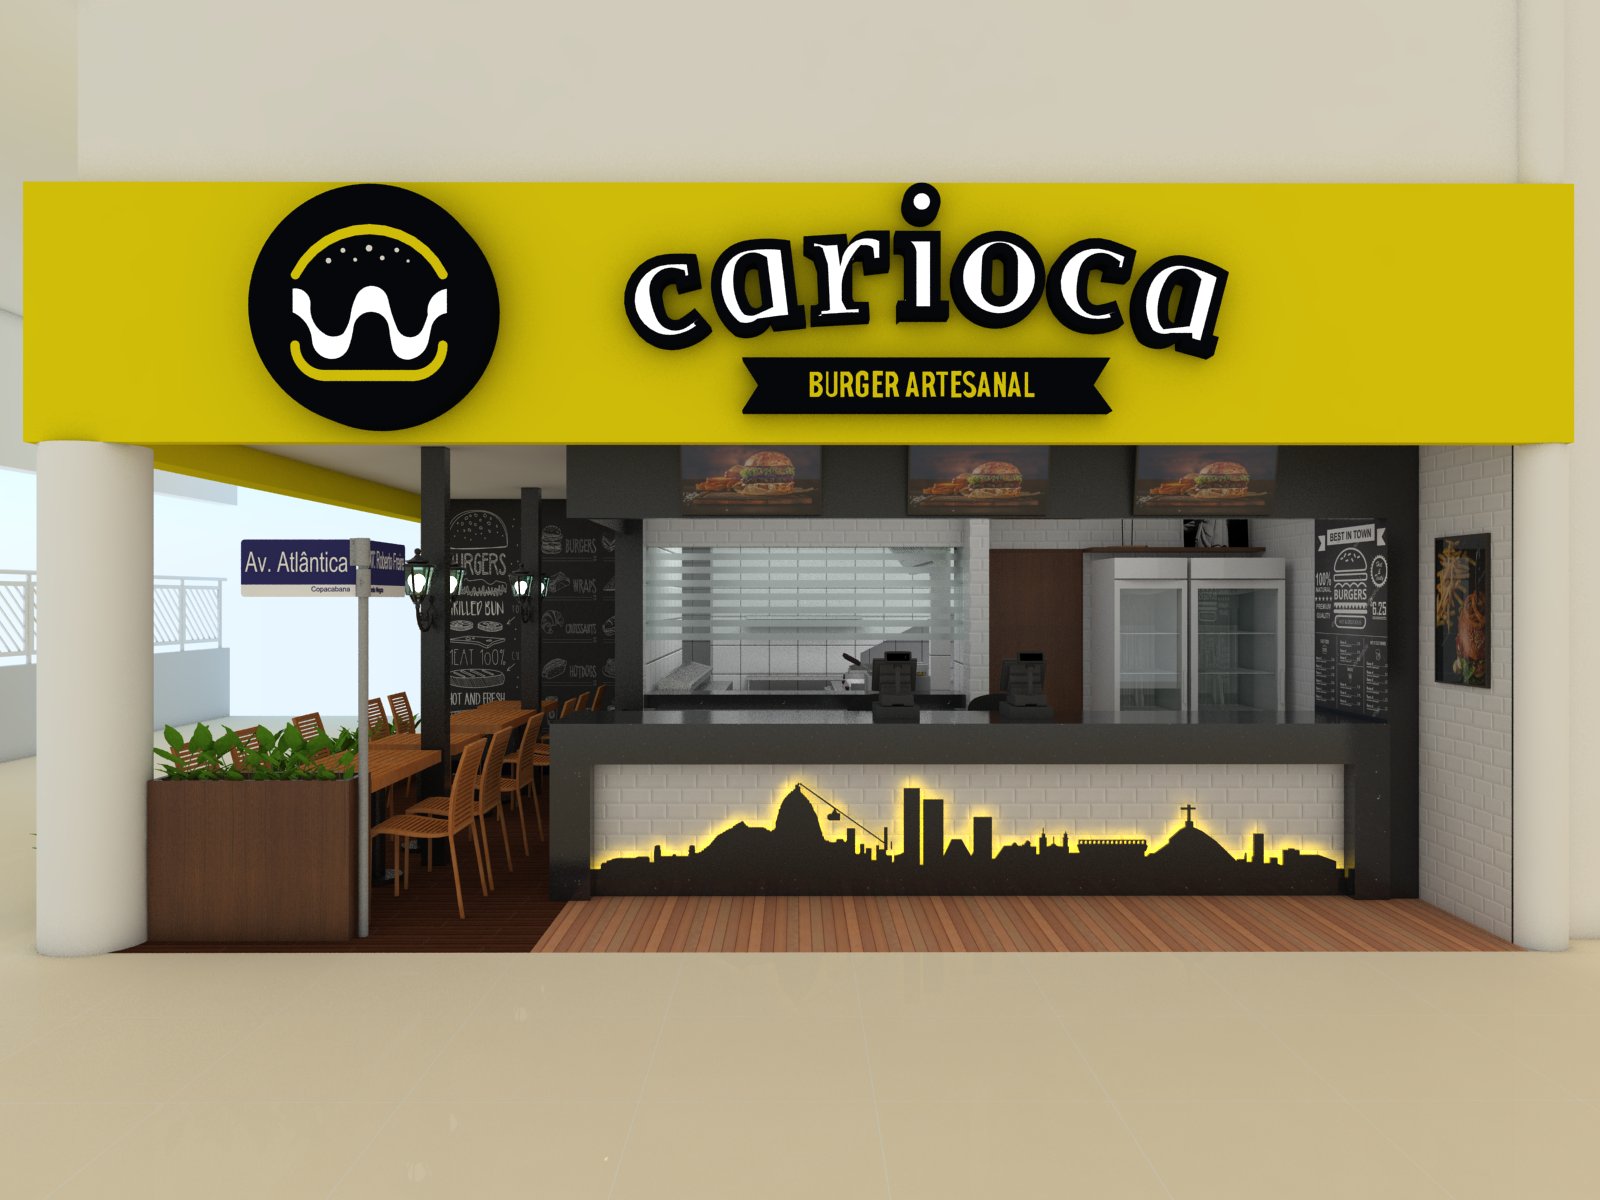 Carioca Burger Artesanal